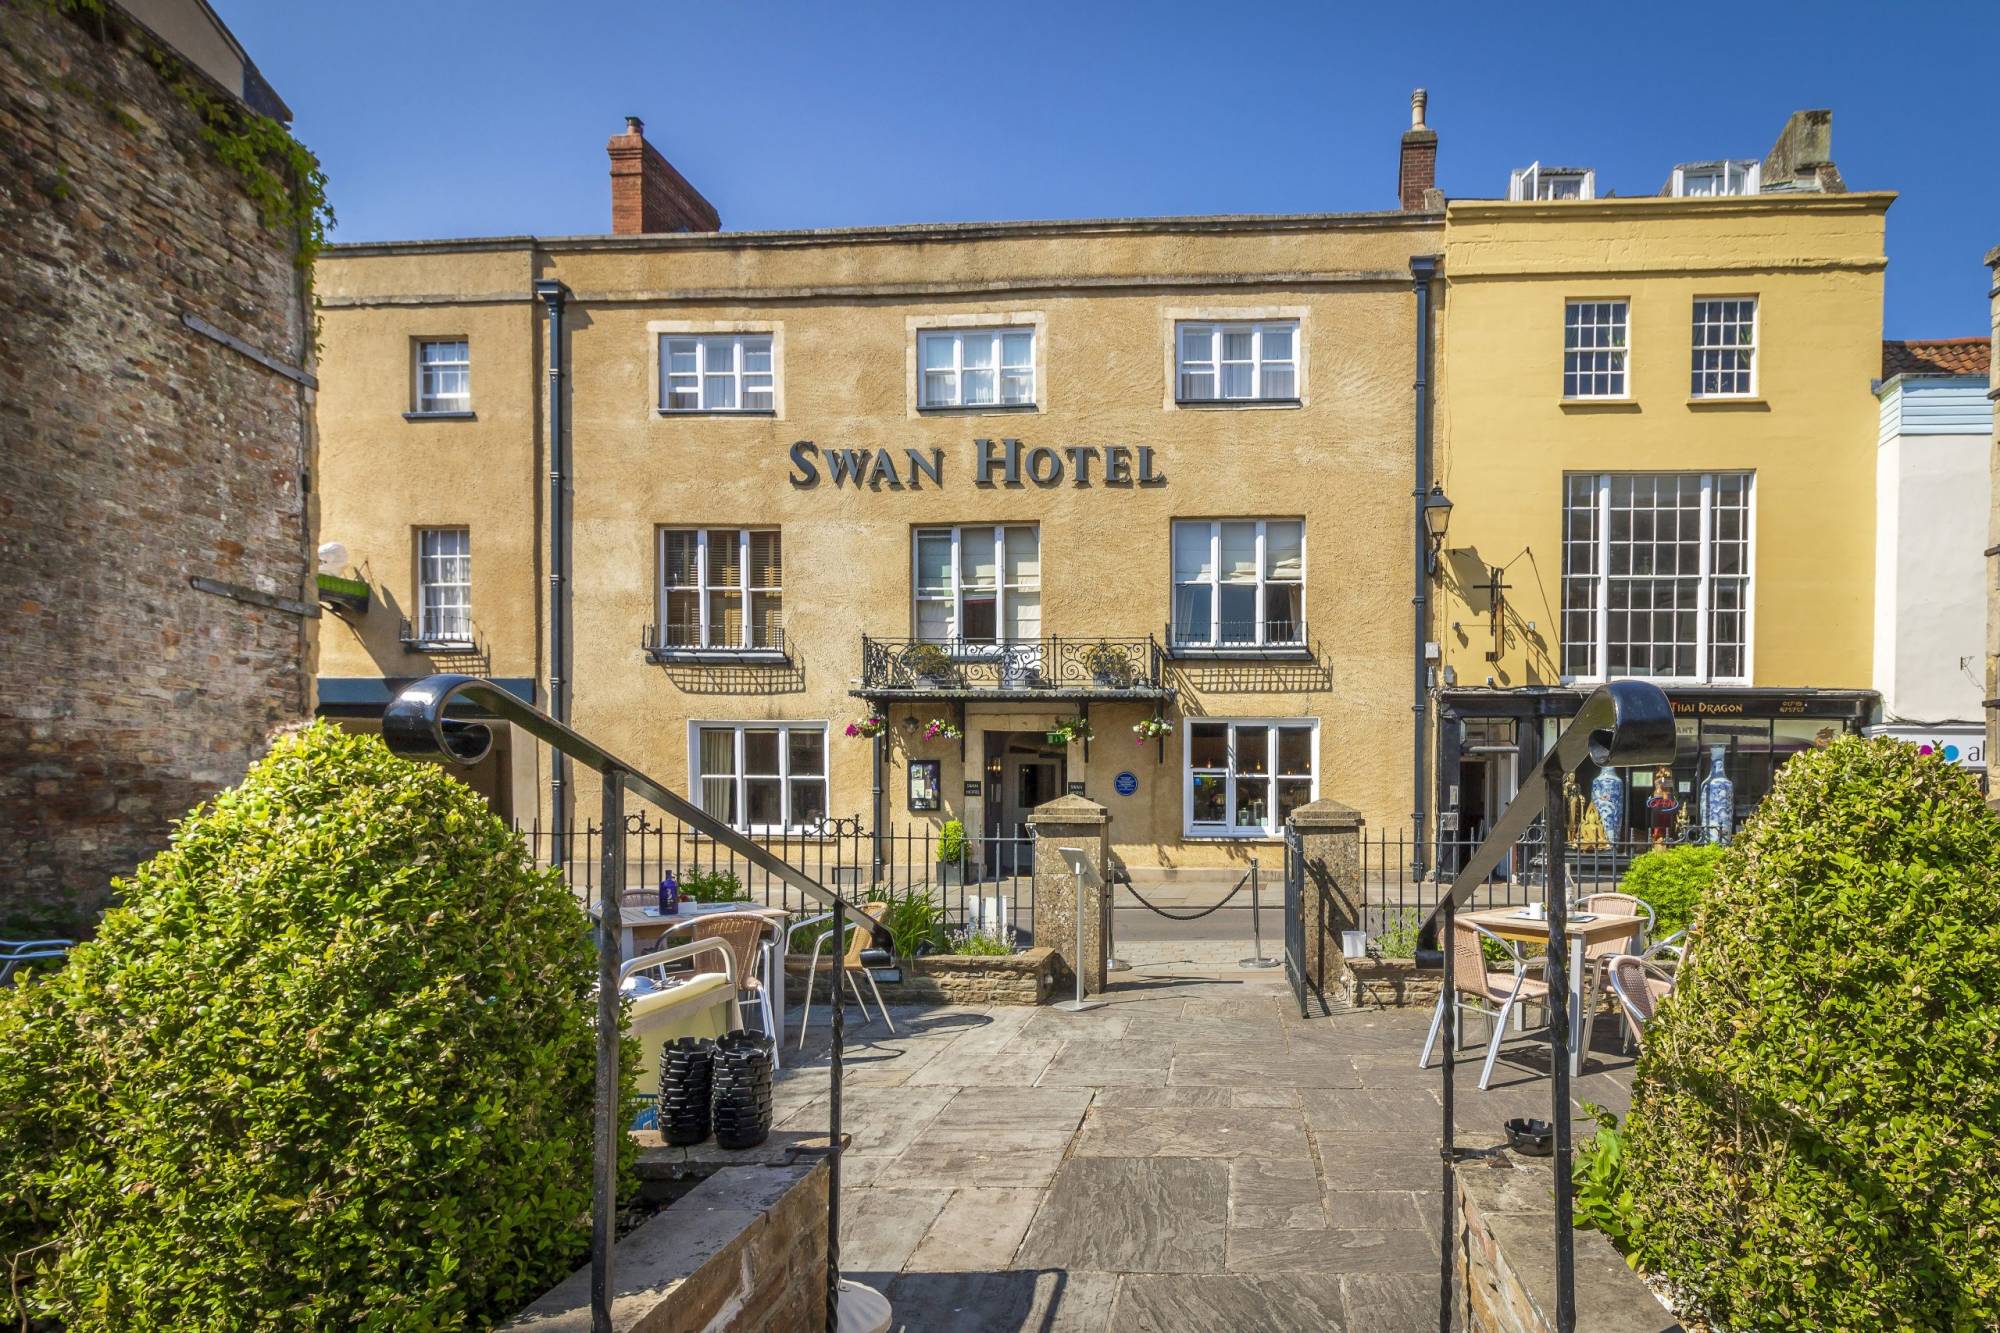 Swan Hotel, Wells